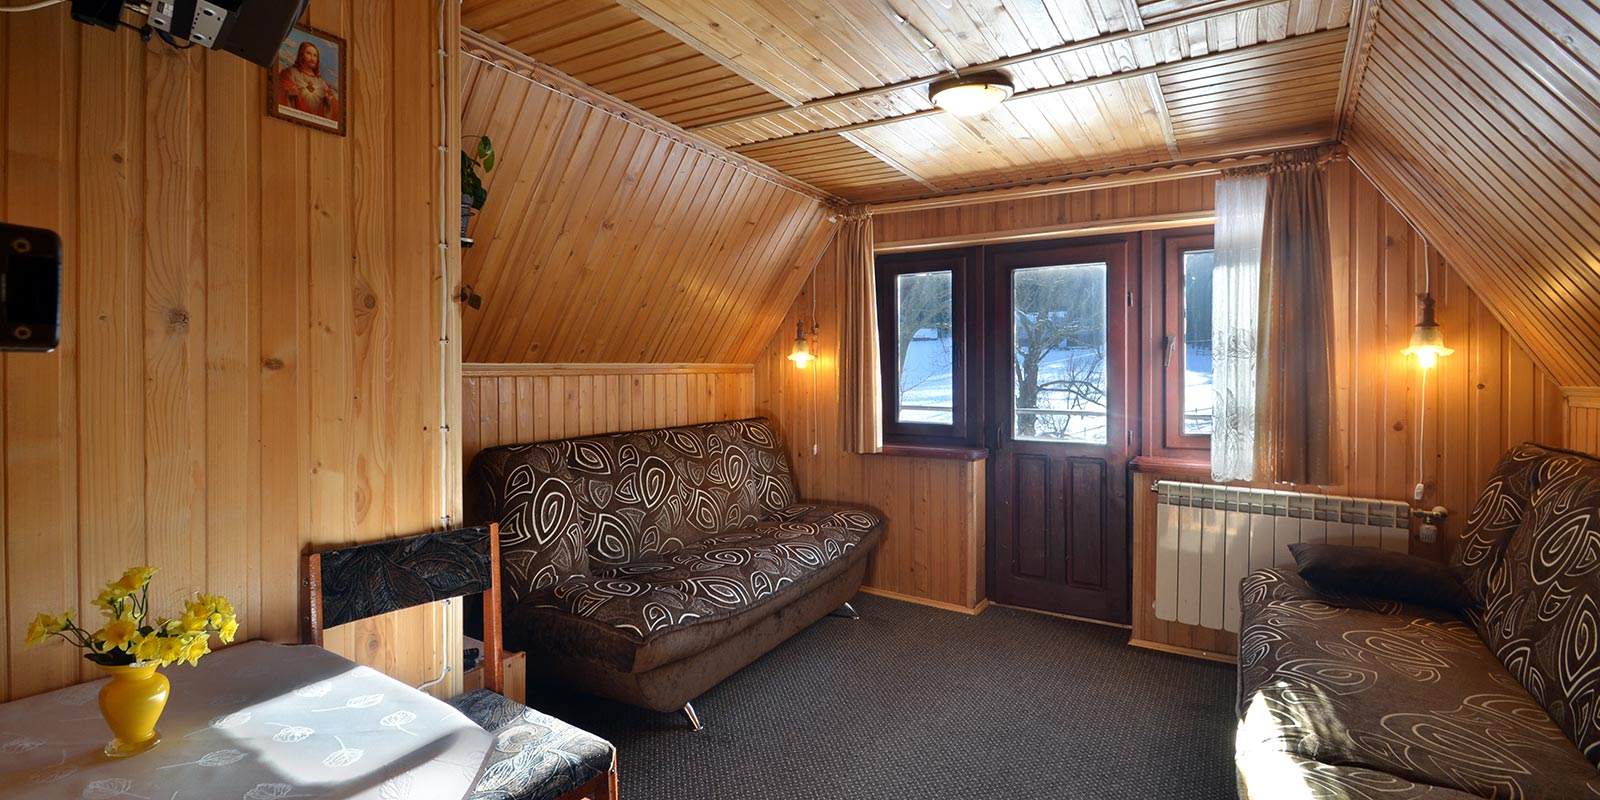 U LISA villa in Zakopane rooms for rent Poland Tatra Mountains 01